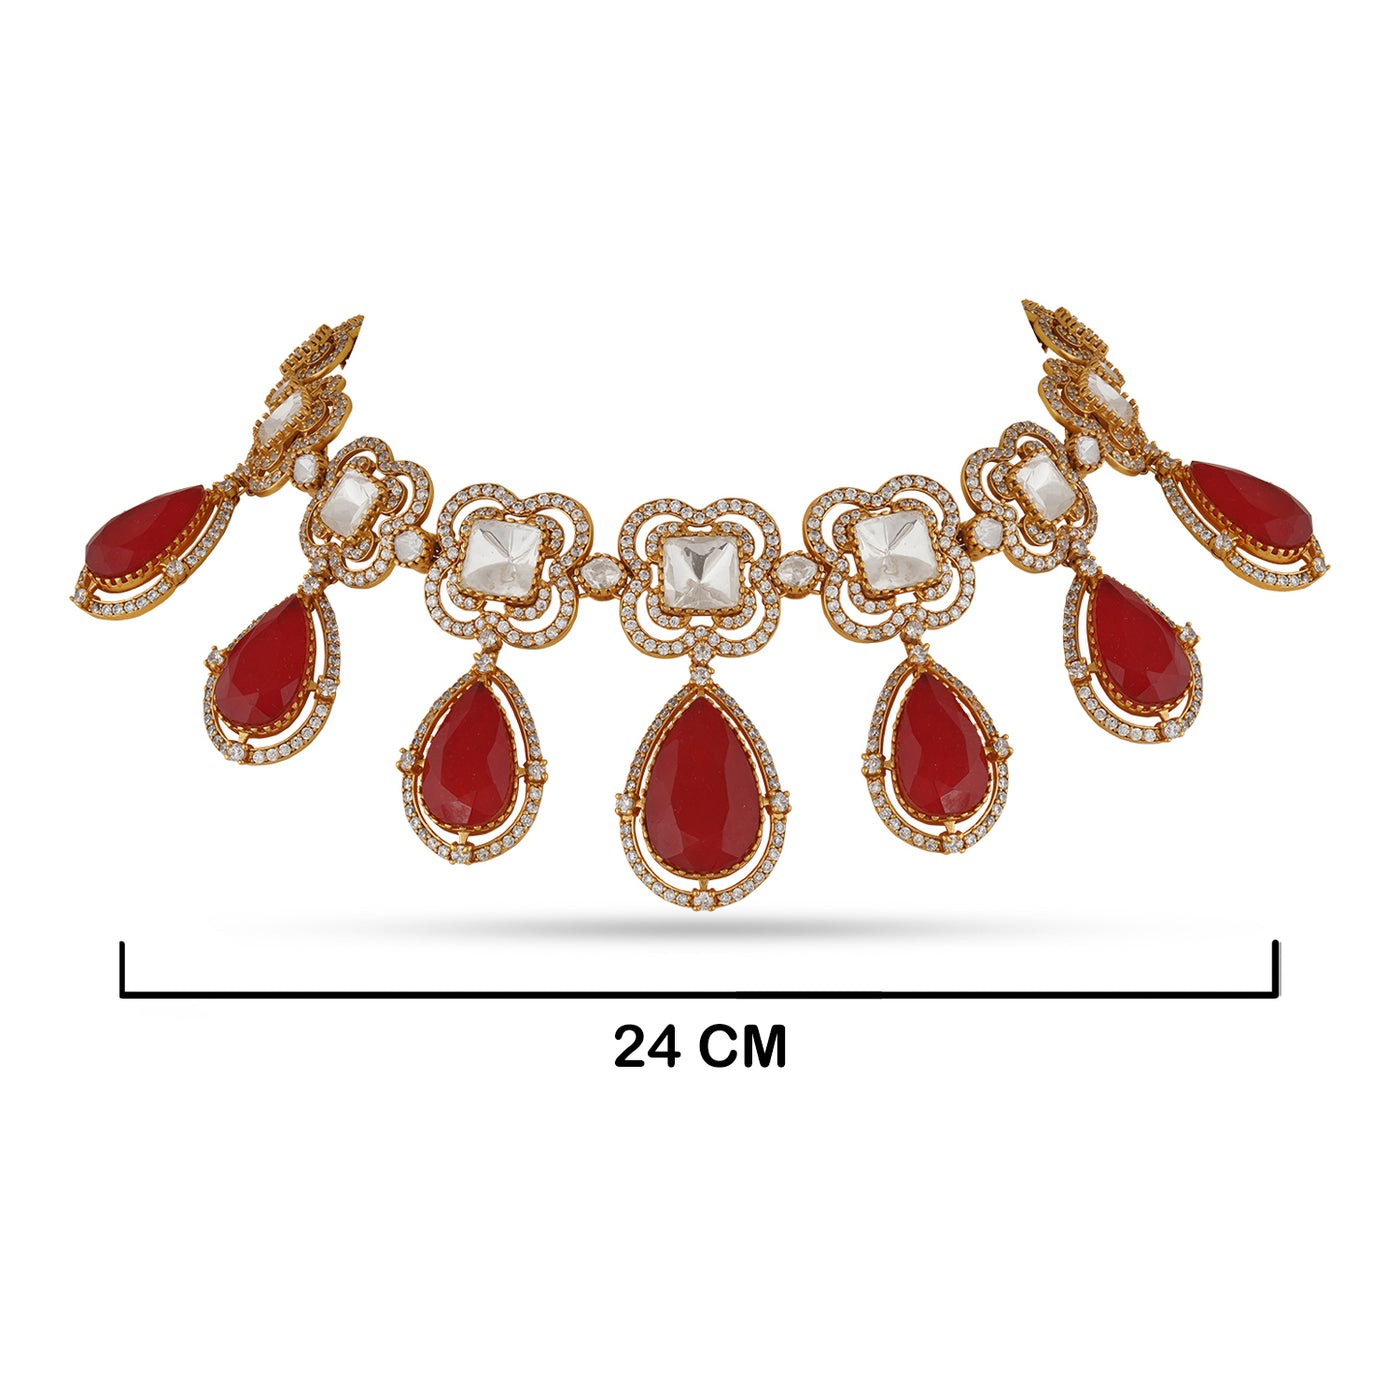 Femida - Polki & Ruby red stone necklace set